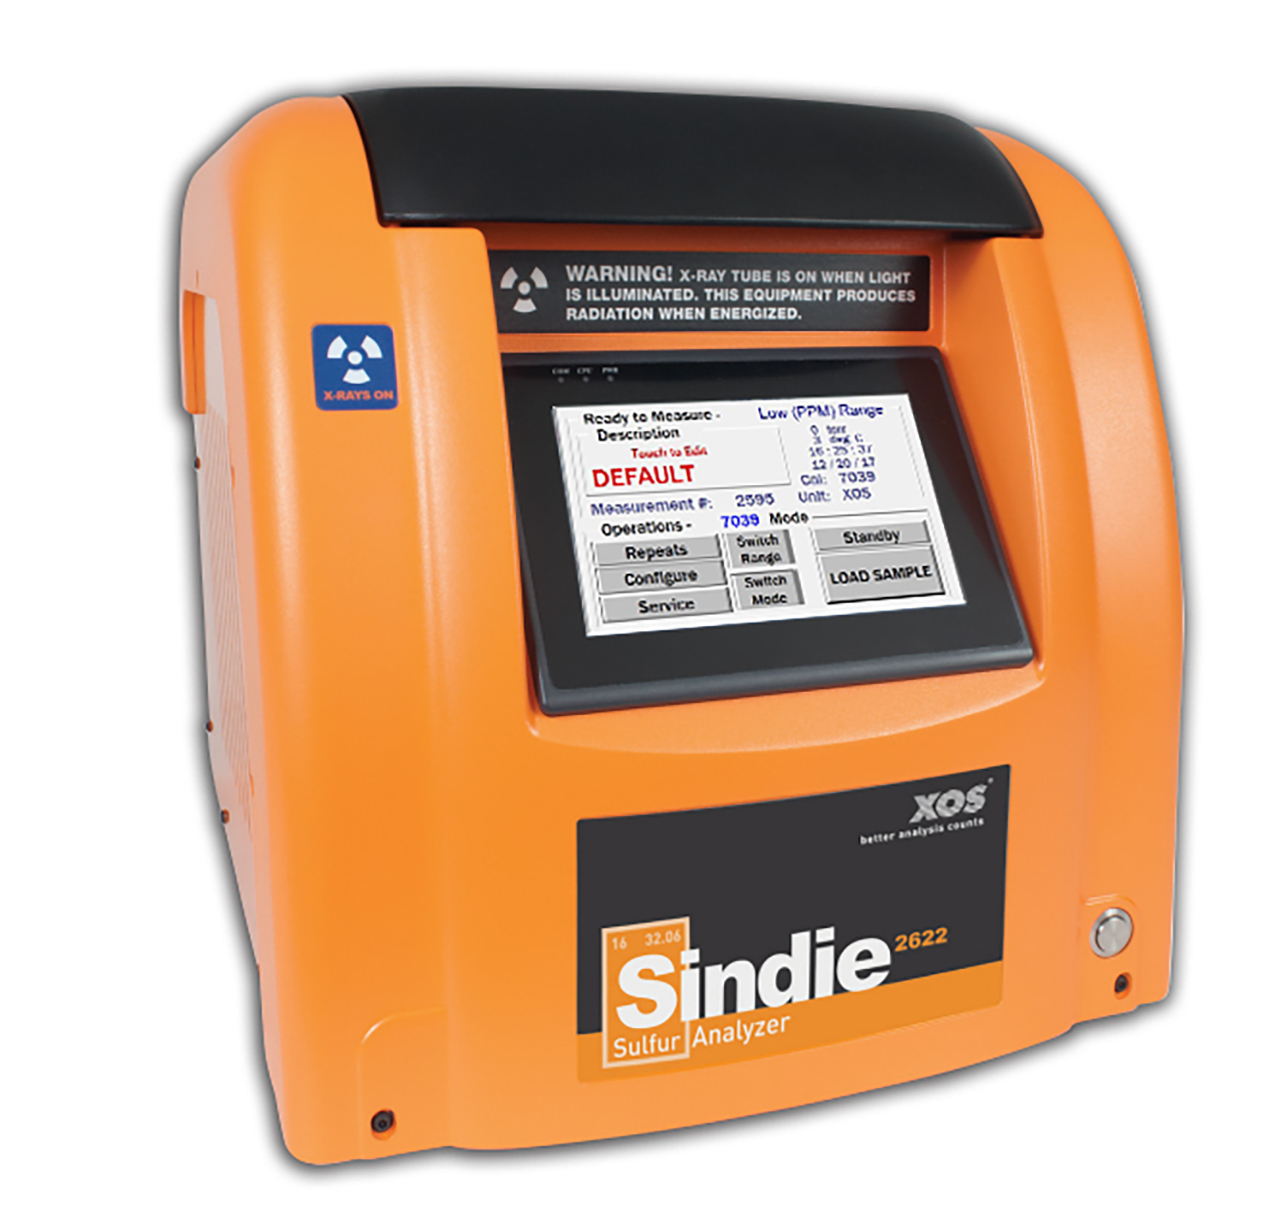 Analisador de Enxofre Modelo Sindie 2622 G3